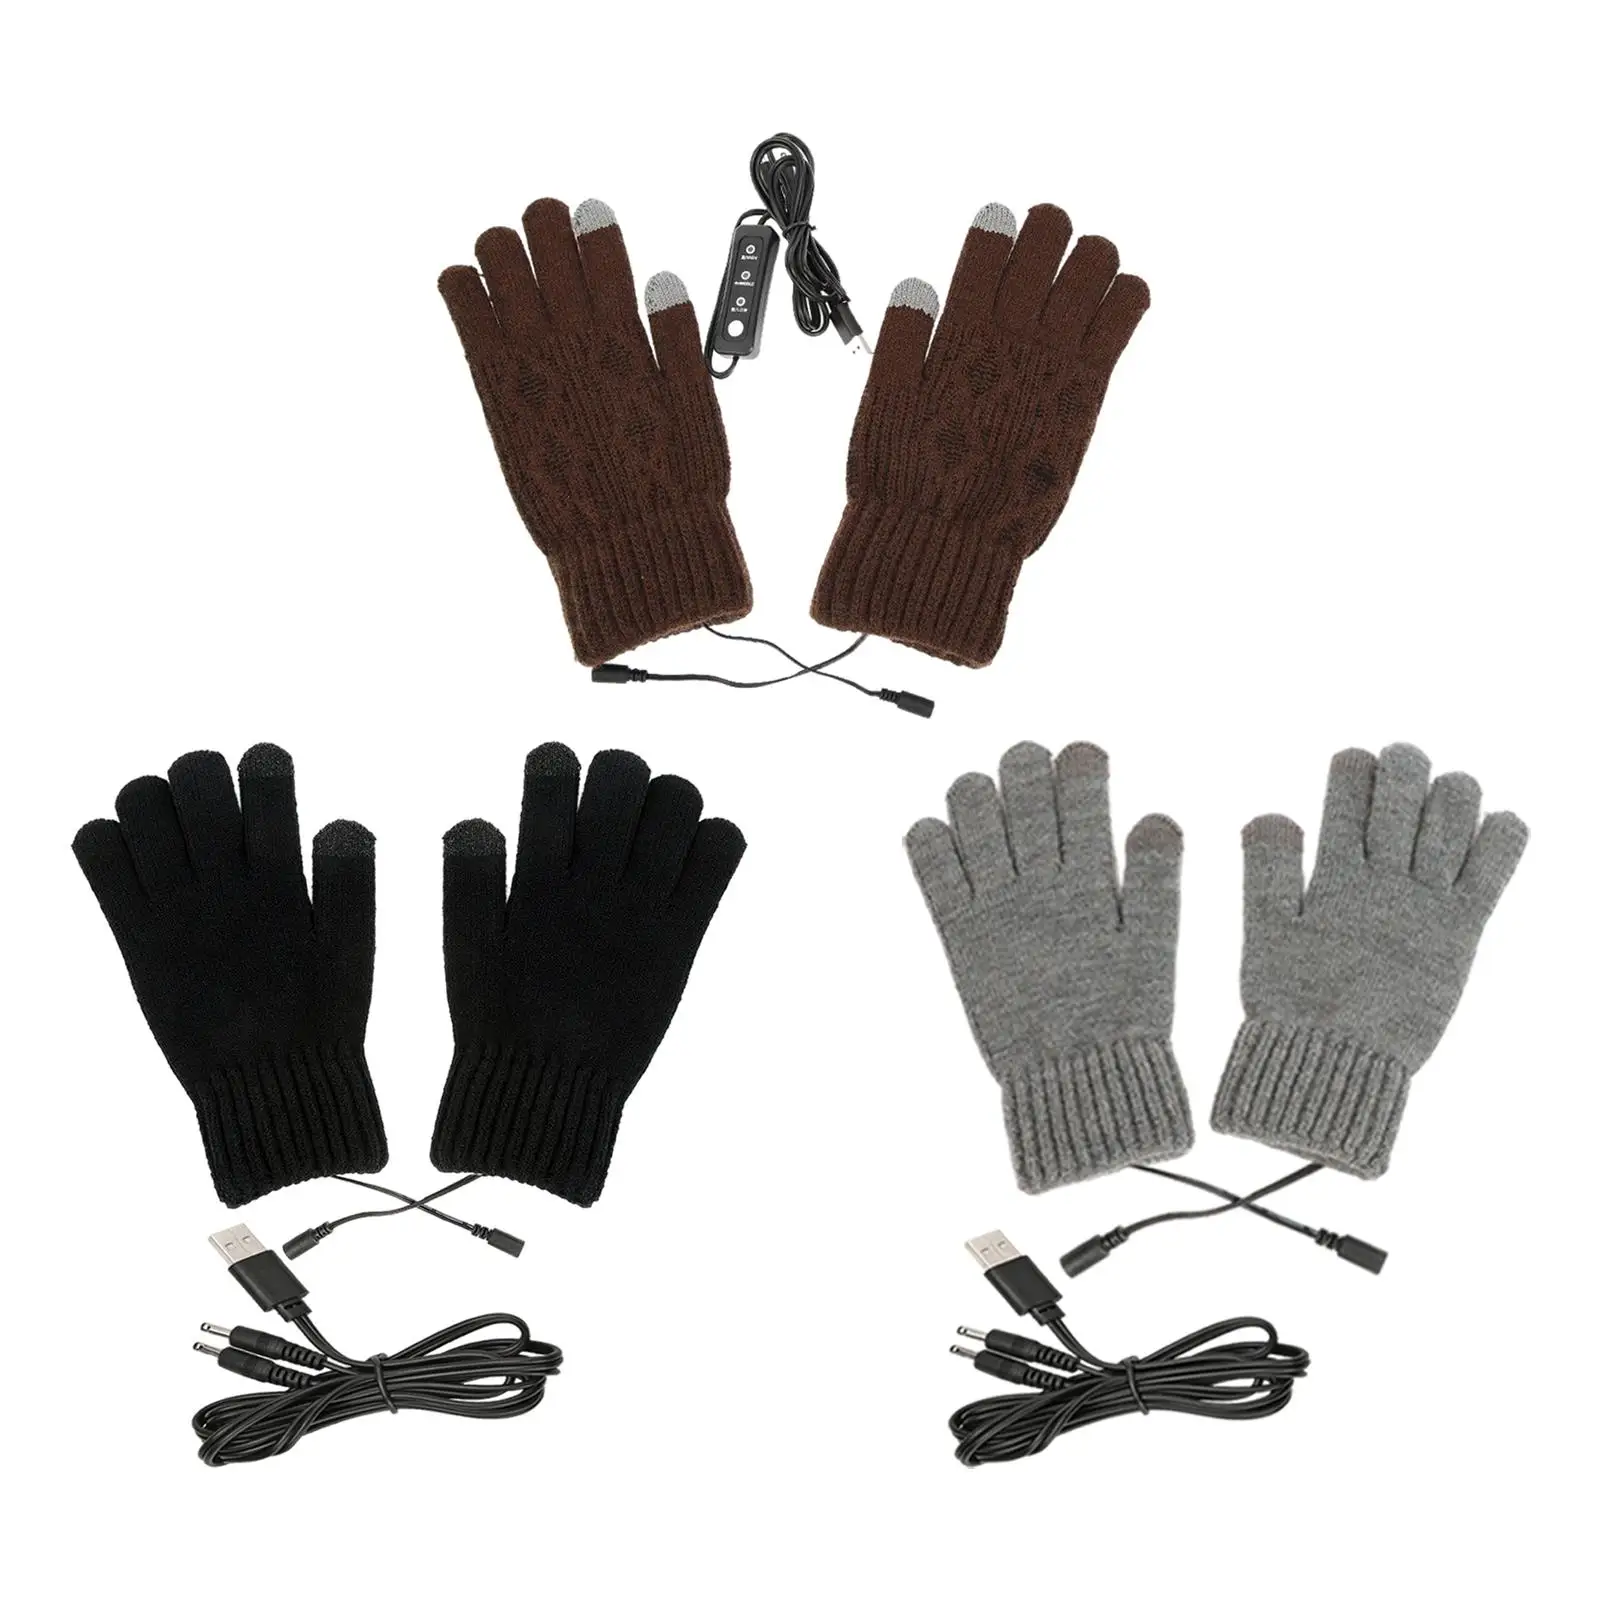 Heated Gloves Touchscreen  Full Finger Gloves Unisex Anti  Knitting Hand Gloves for Working Typing